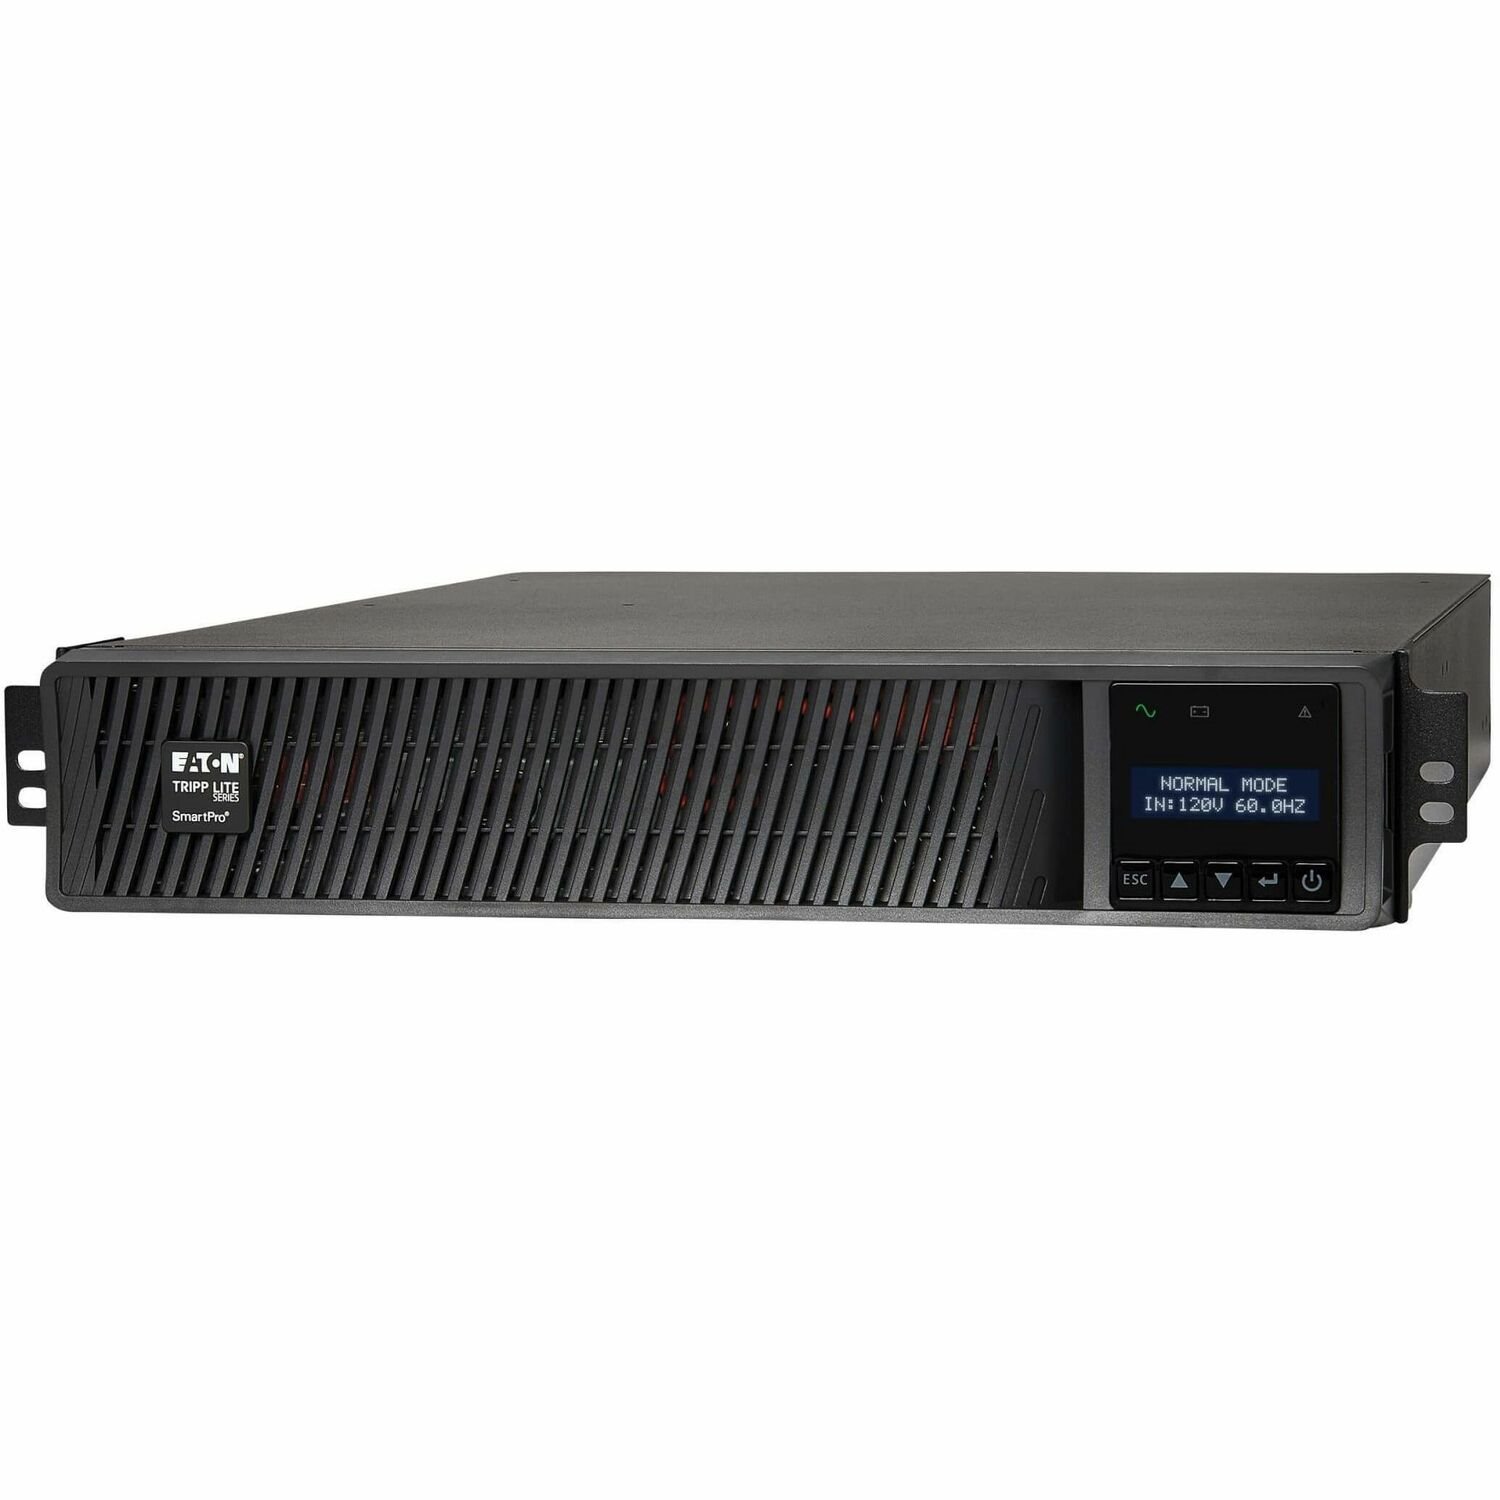 Eaton Tripp Lite Series SmartPro 1440VA 1440W 120V Line-Interactive Sine Wave UPS - 8 Outlets, Extended Run, Network Card Option, LCD, USB, DB9, 2U Rack/Tower, TAA